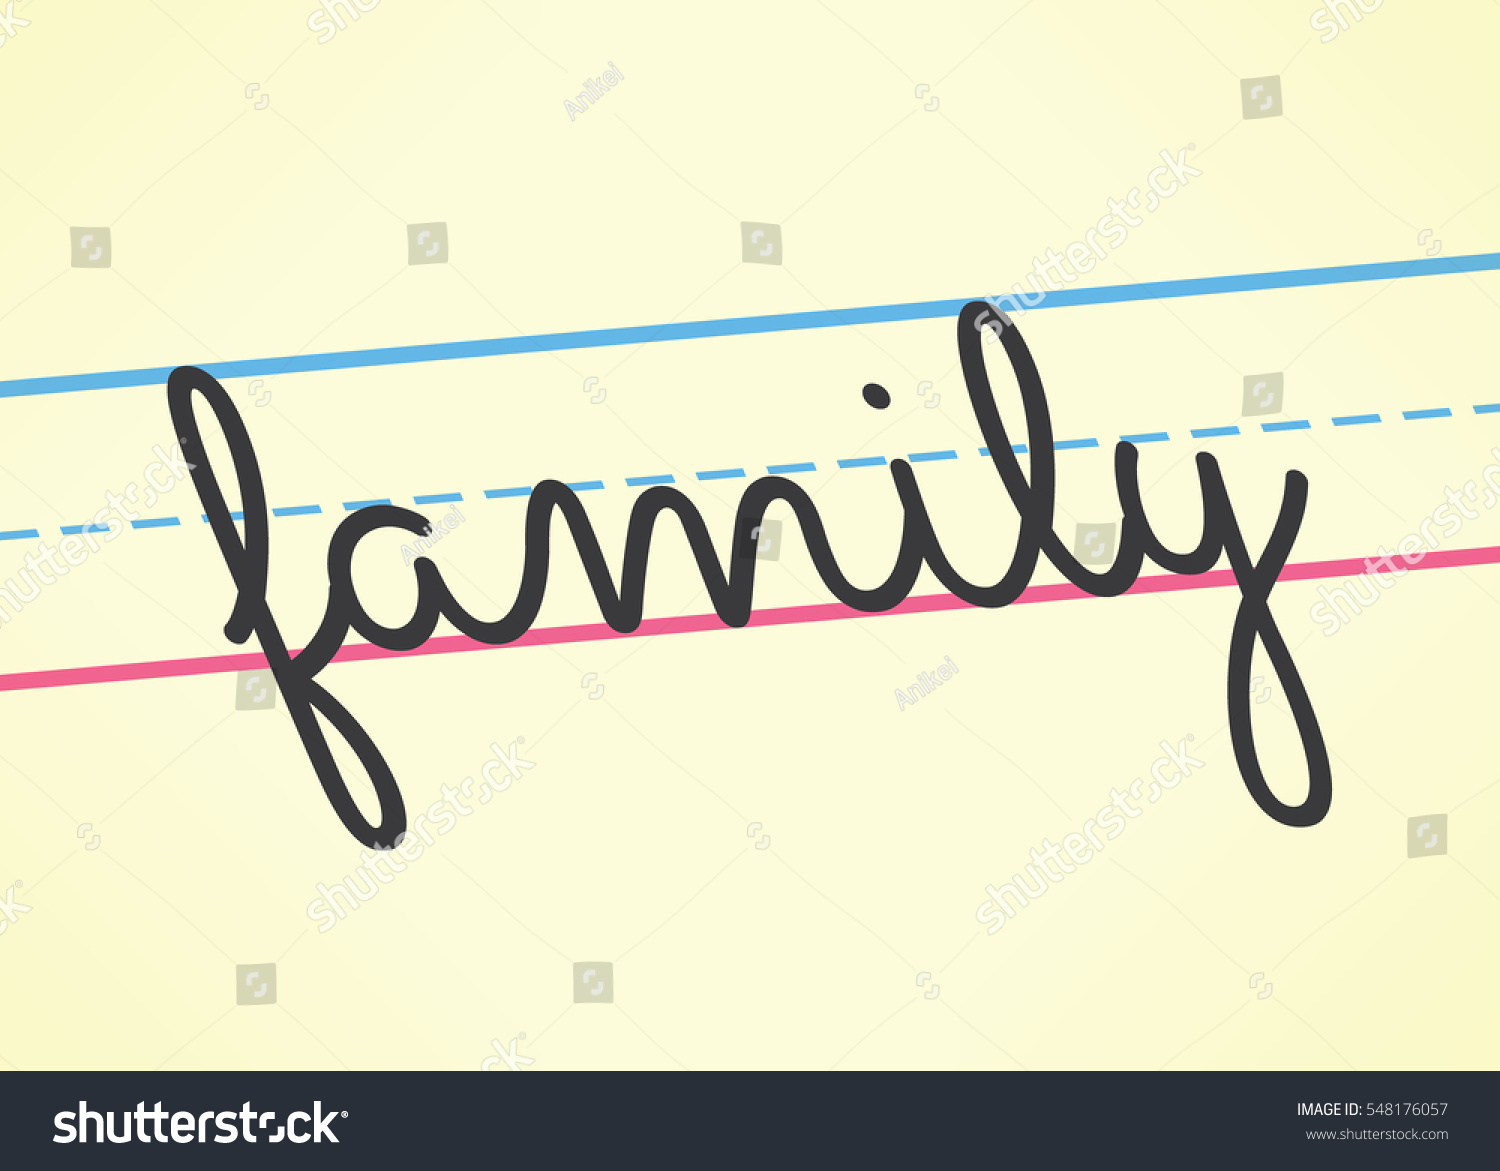 Family cursive word handwritten in children education style. Idea